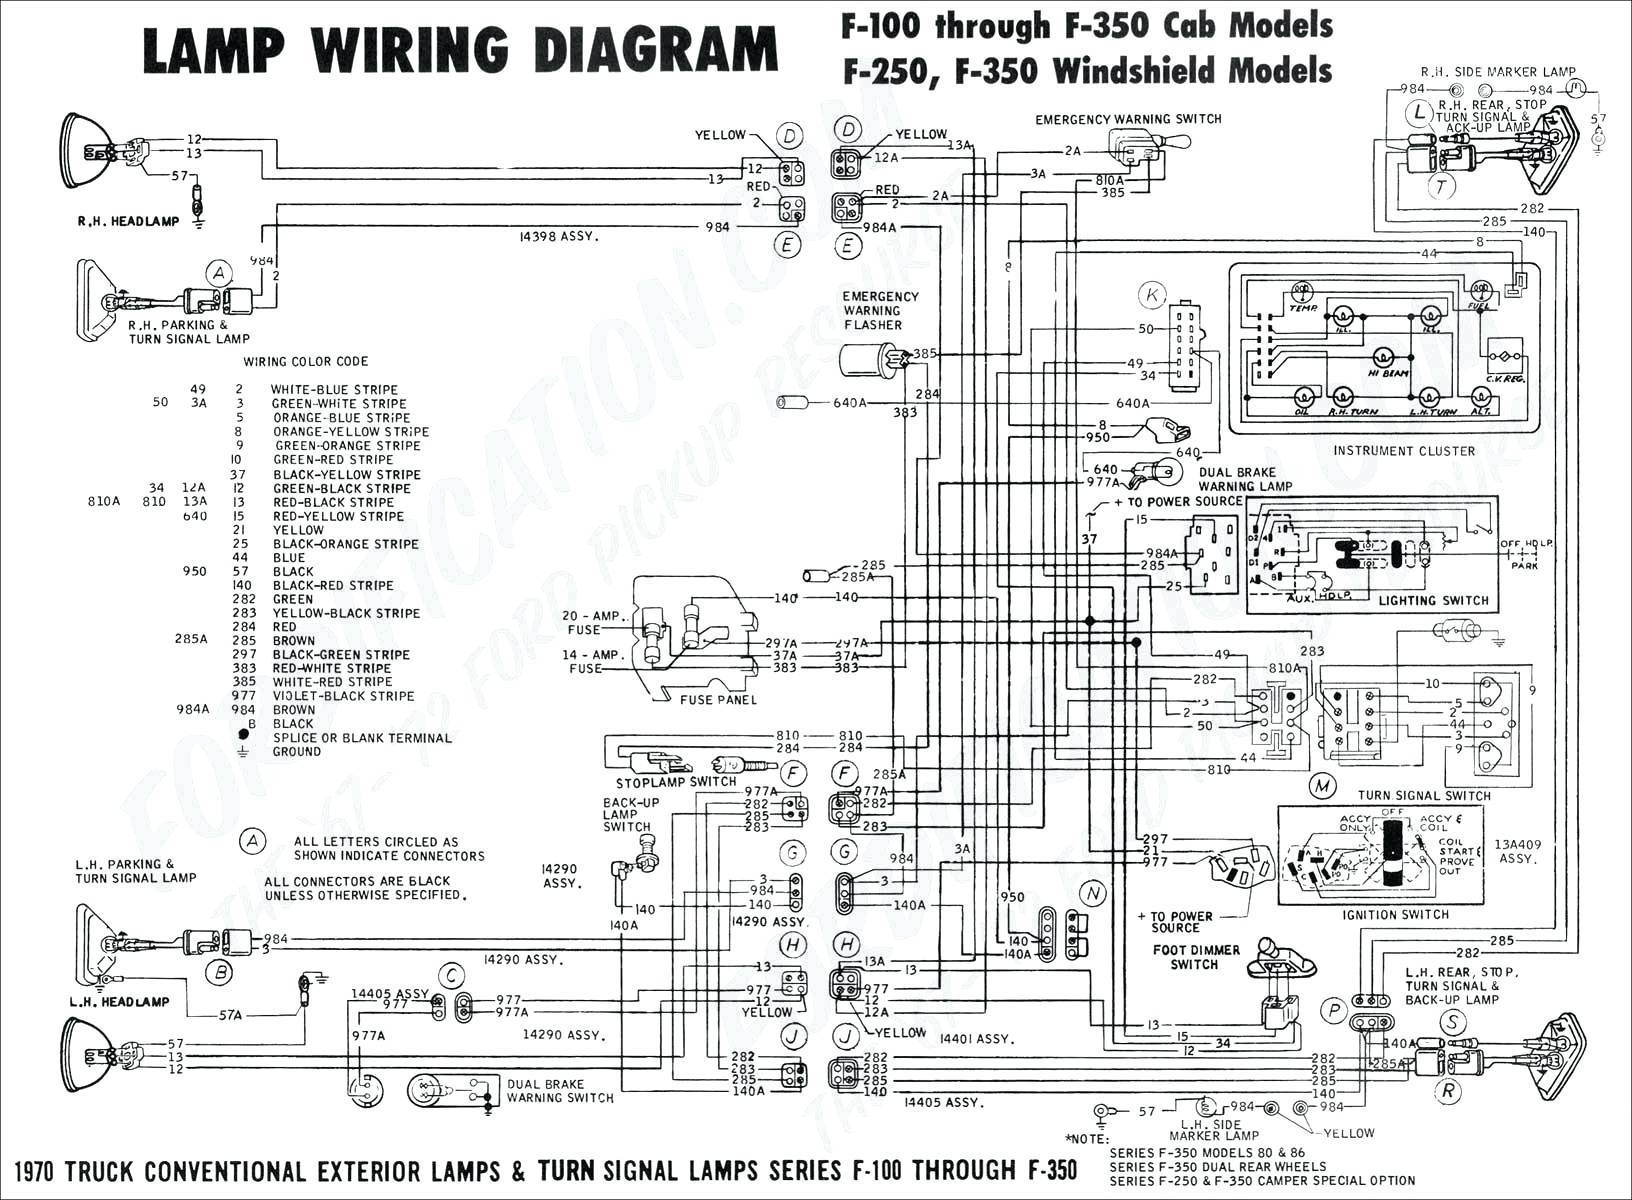 2002 Hyundai Accent Engine Diagram Wire Diagram 04 Hyundai Santa Fe Ets Wiring Diagram Used Of 2002 Hyundai Accent Engine Diagram